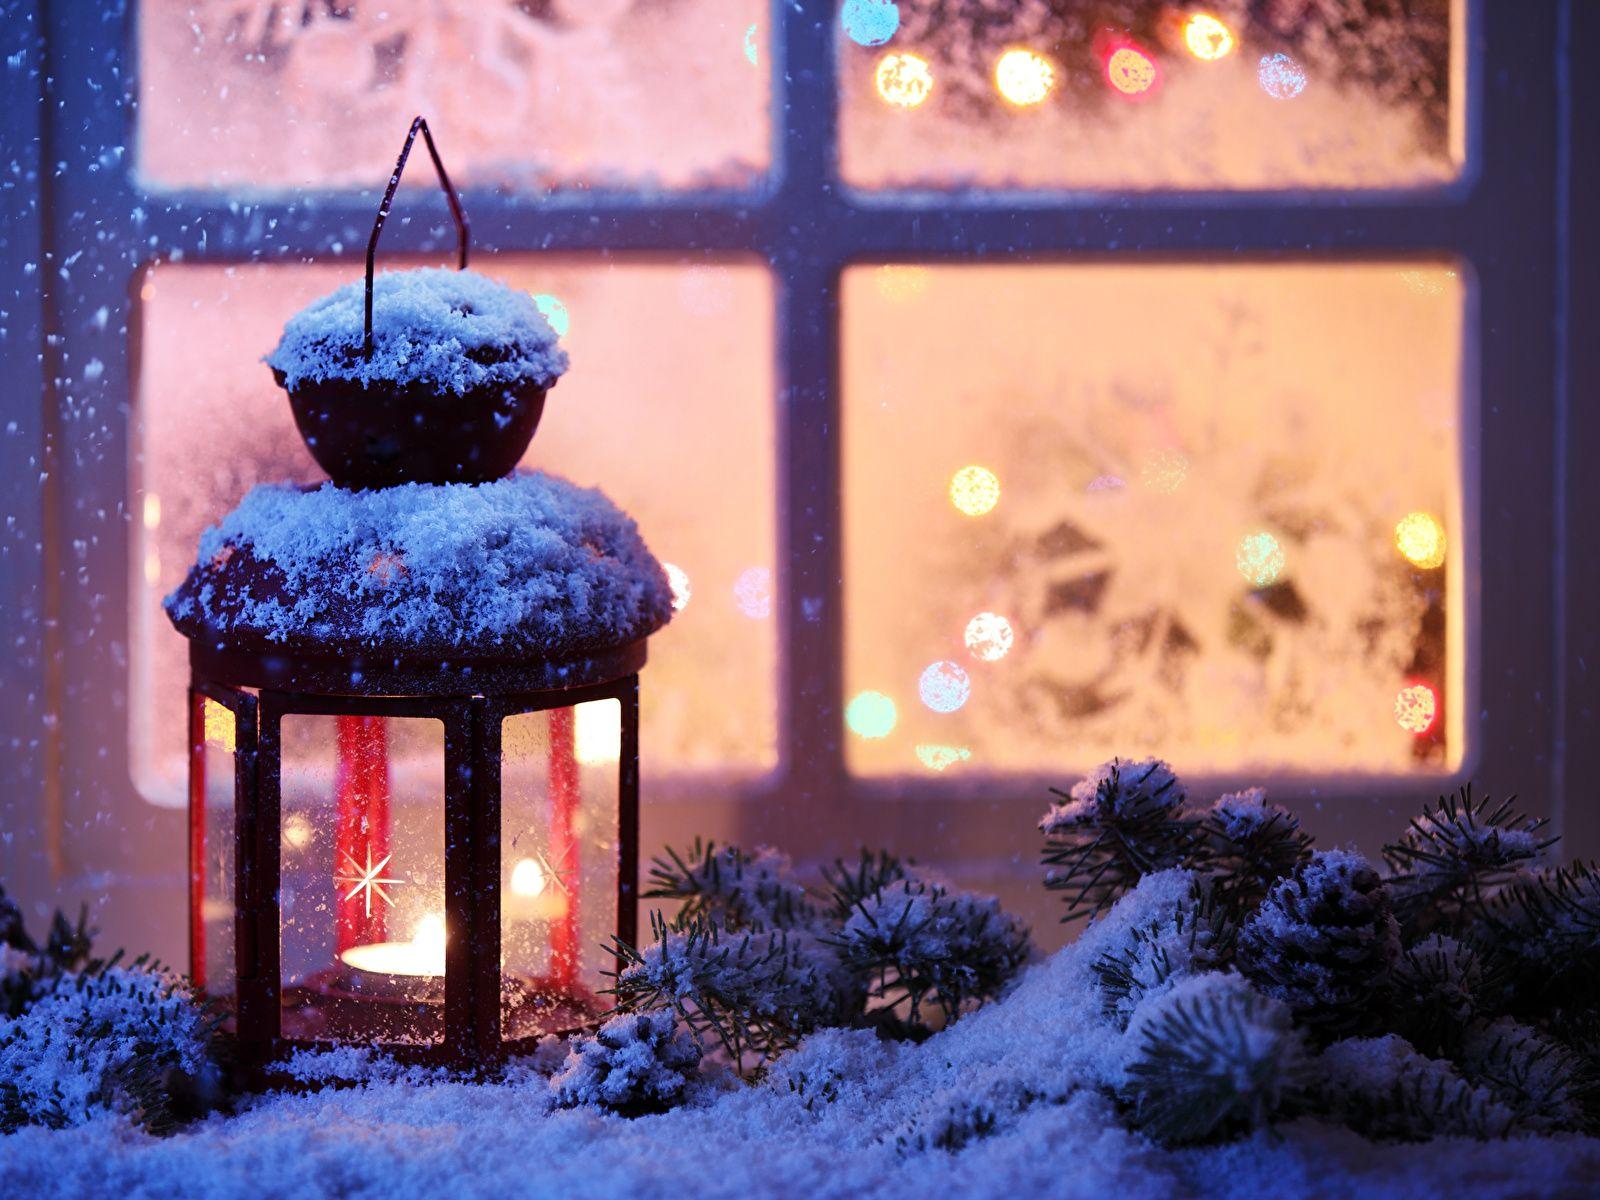 Snow Lantern Wallpapers - Top Free Snow Lantern Backgrounds ...